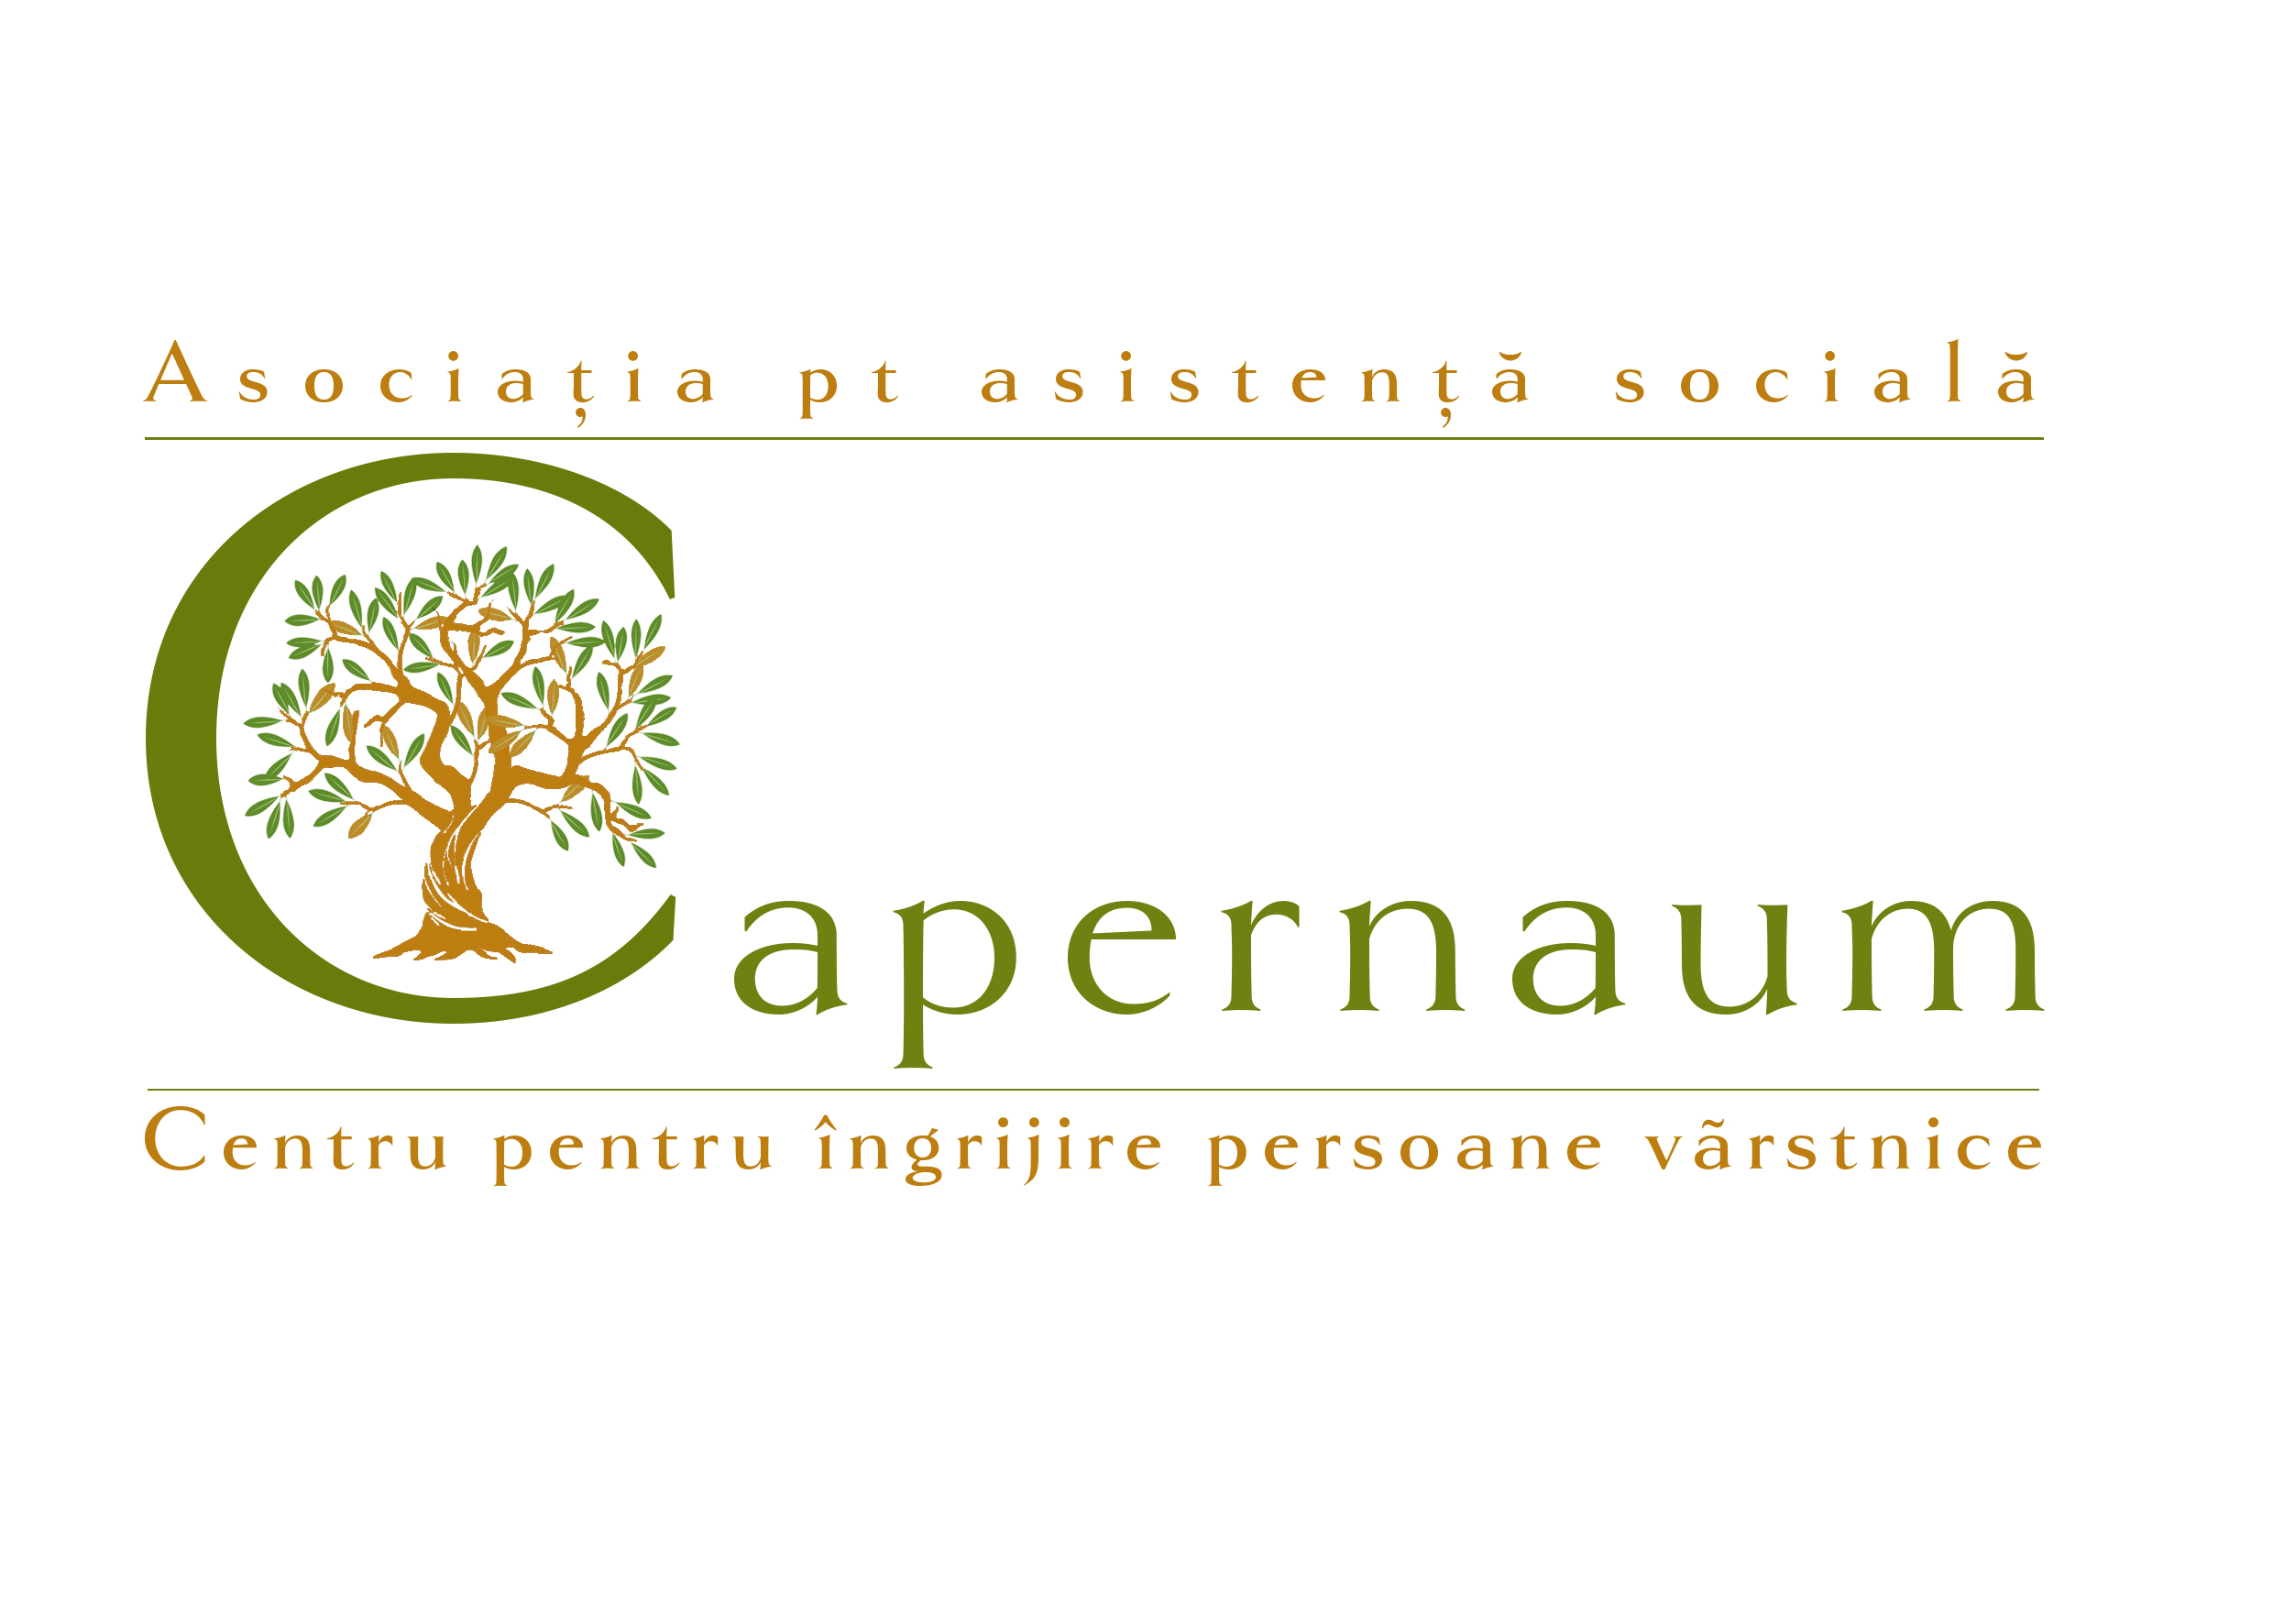 ASOCIATIA PENTRU ASISTENTA SOCIALA CAPERNAUM logo